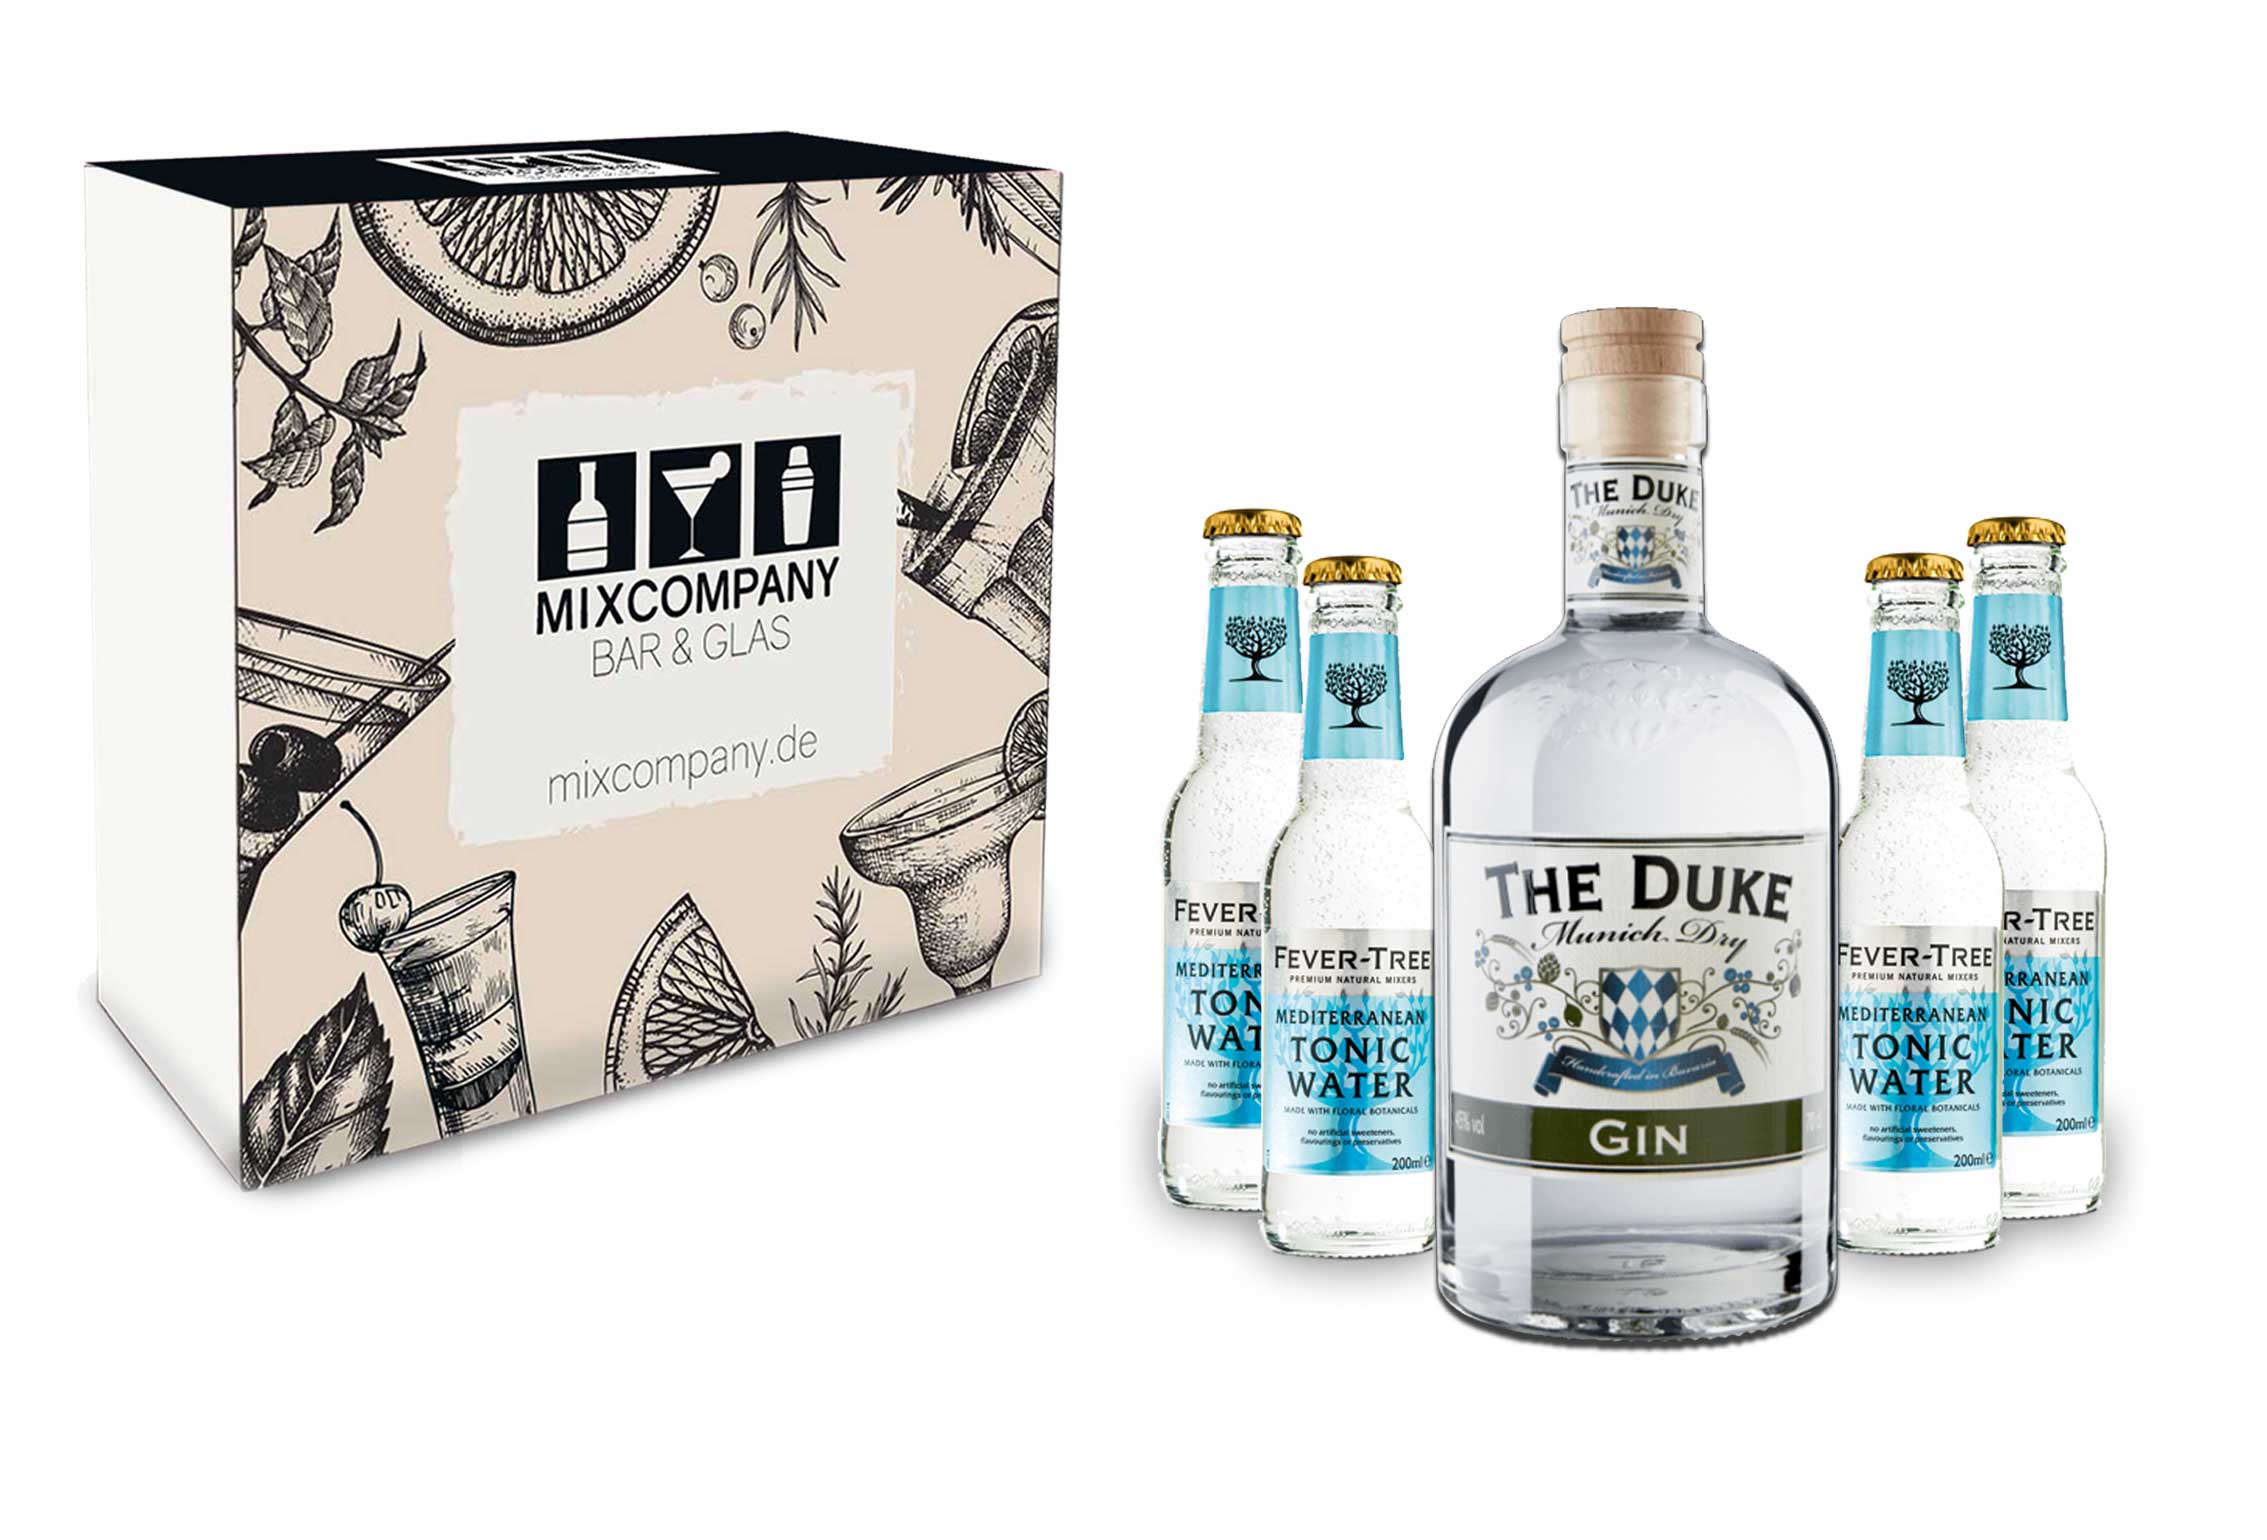 The Duke Geschenkset - Munich Dry Gin 0,7l 700ml (45% Vol) + 4x Fever Tree Mediterranean Tonic Water 200ml inkl. Pfand MEHRWEG + Geschenkverpackung